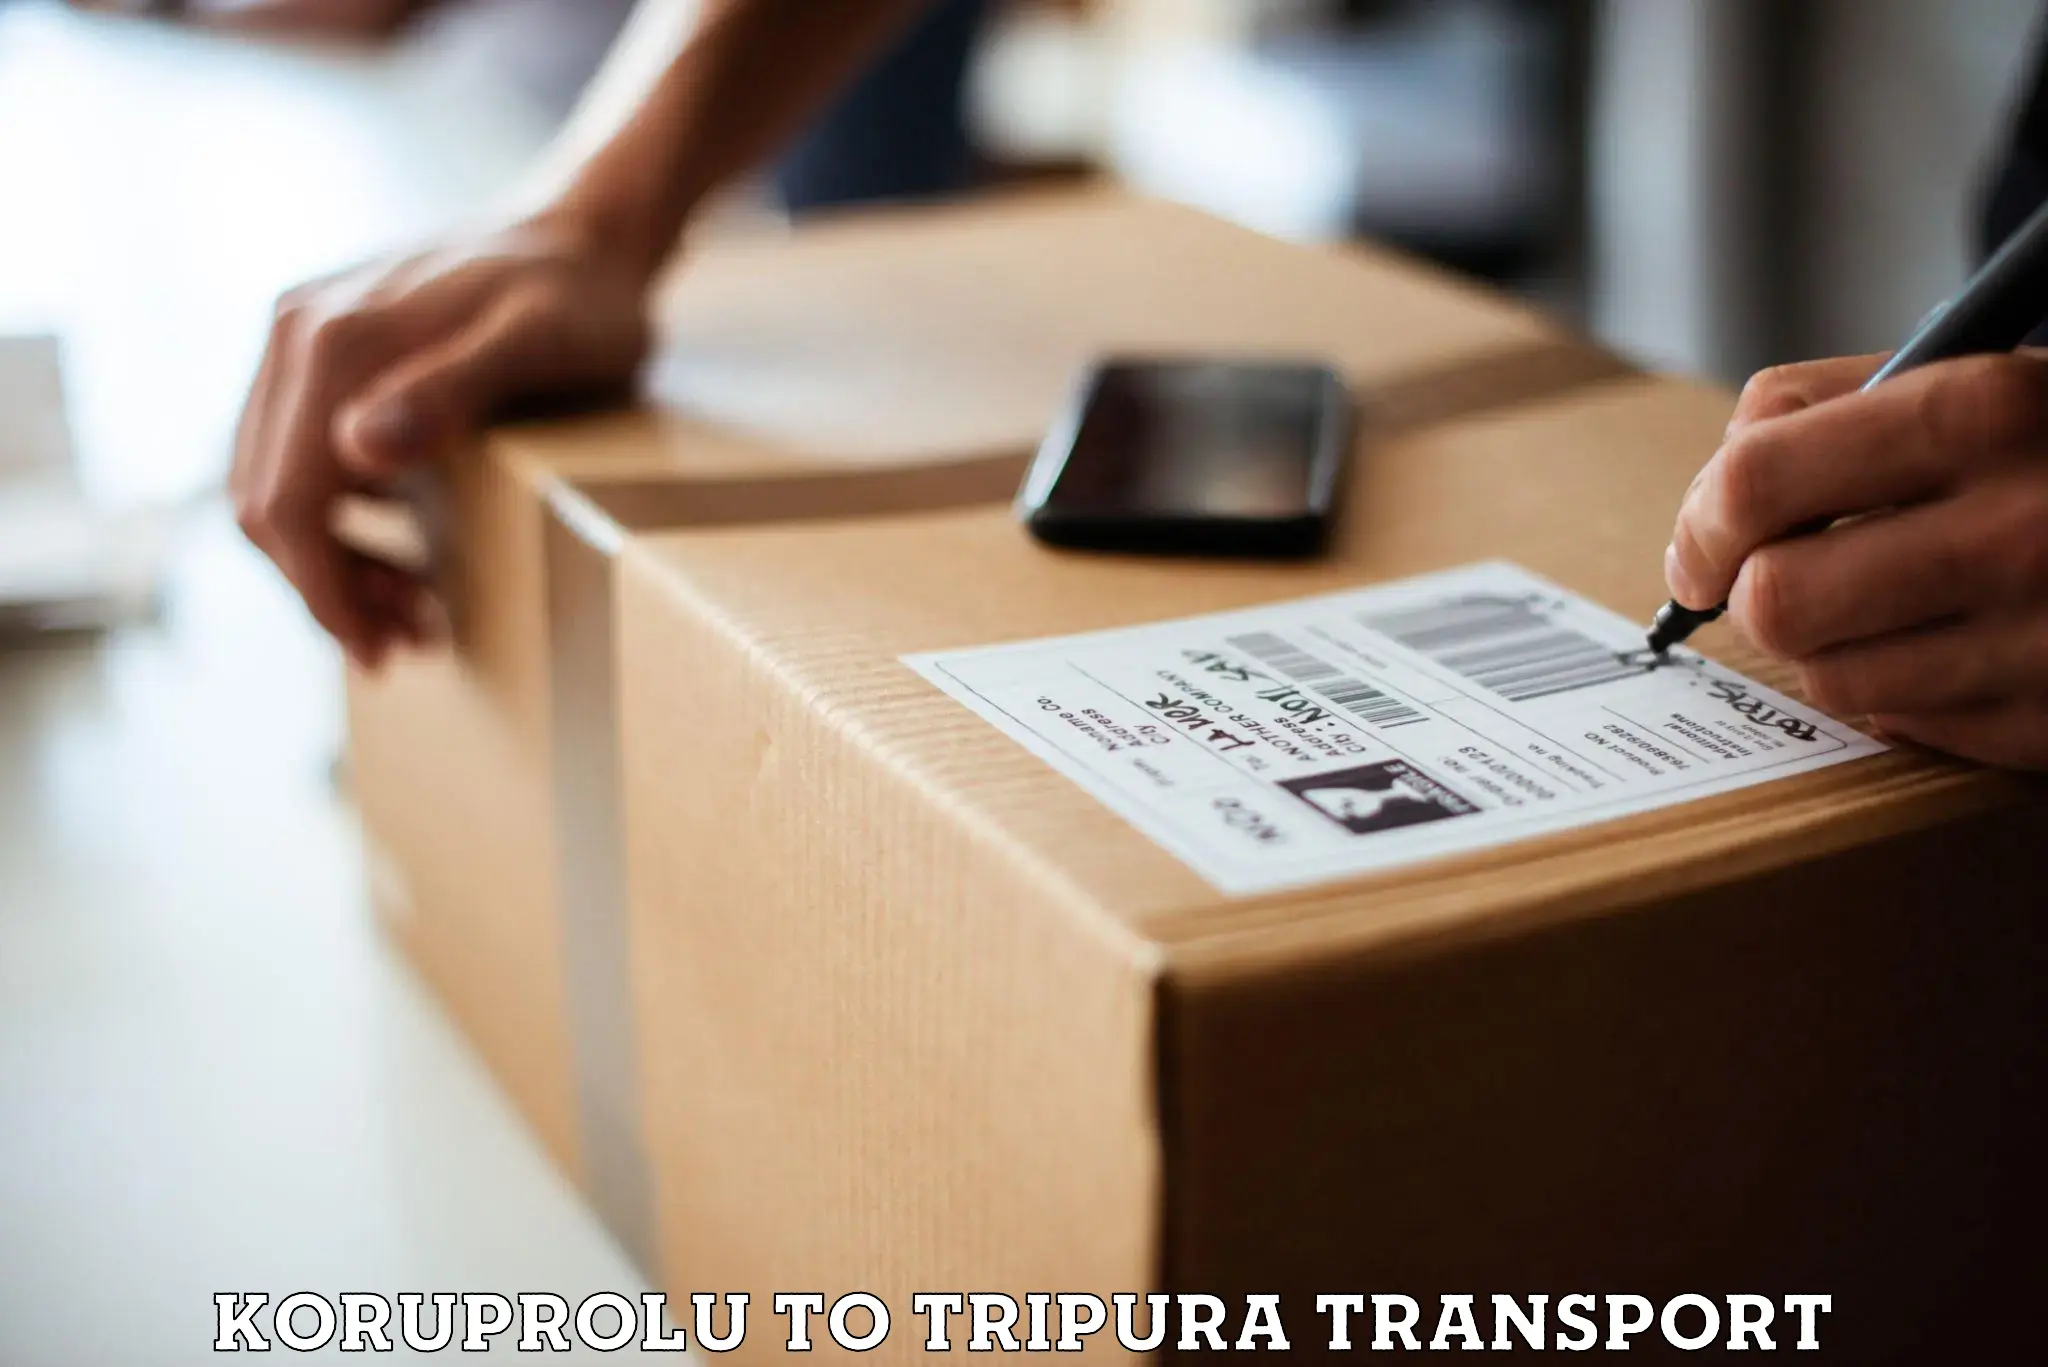 Transport in sharing Koruprolu to West Tripura